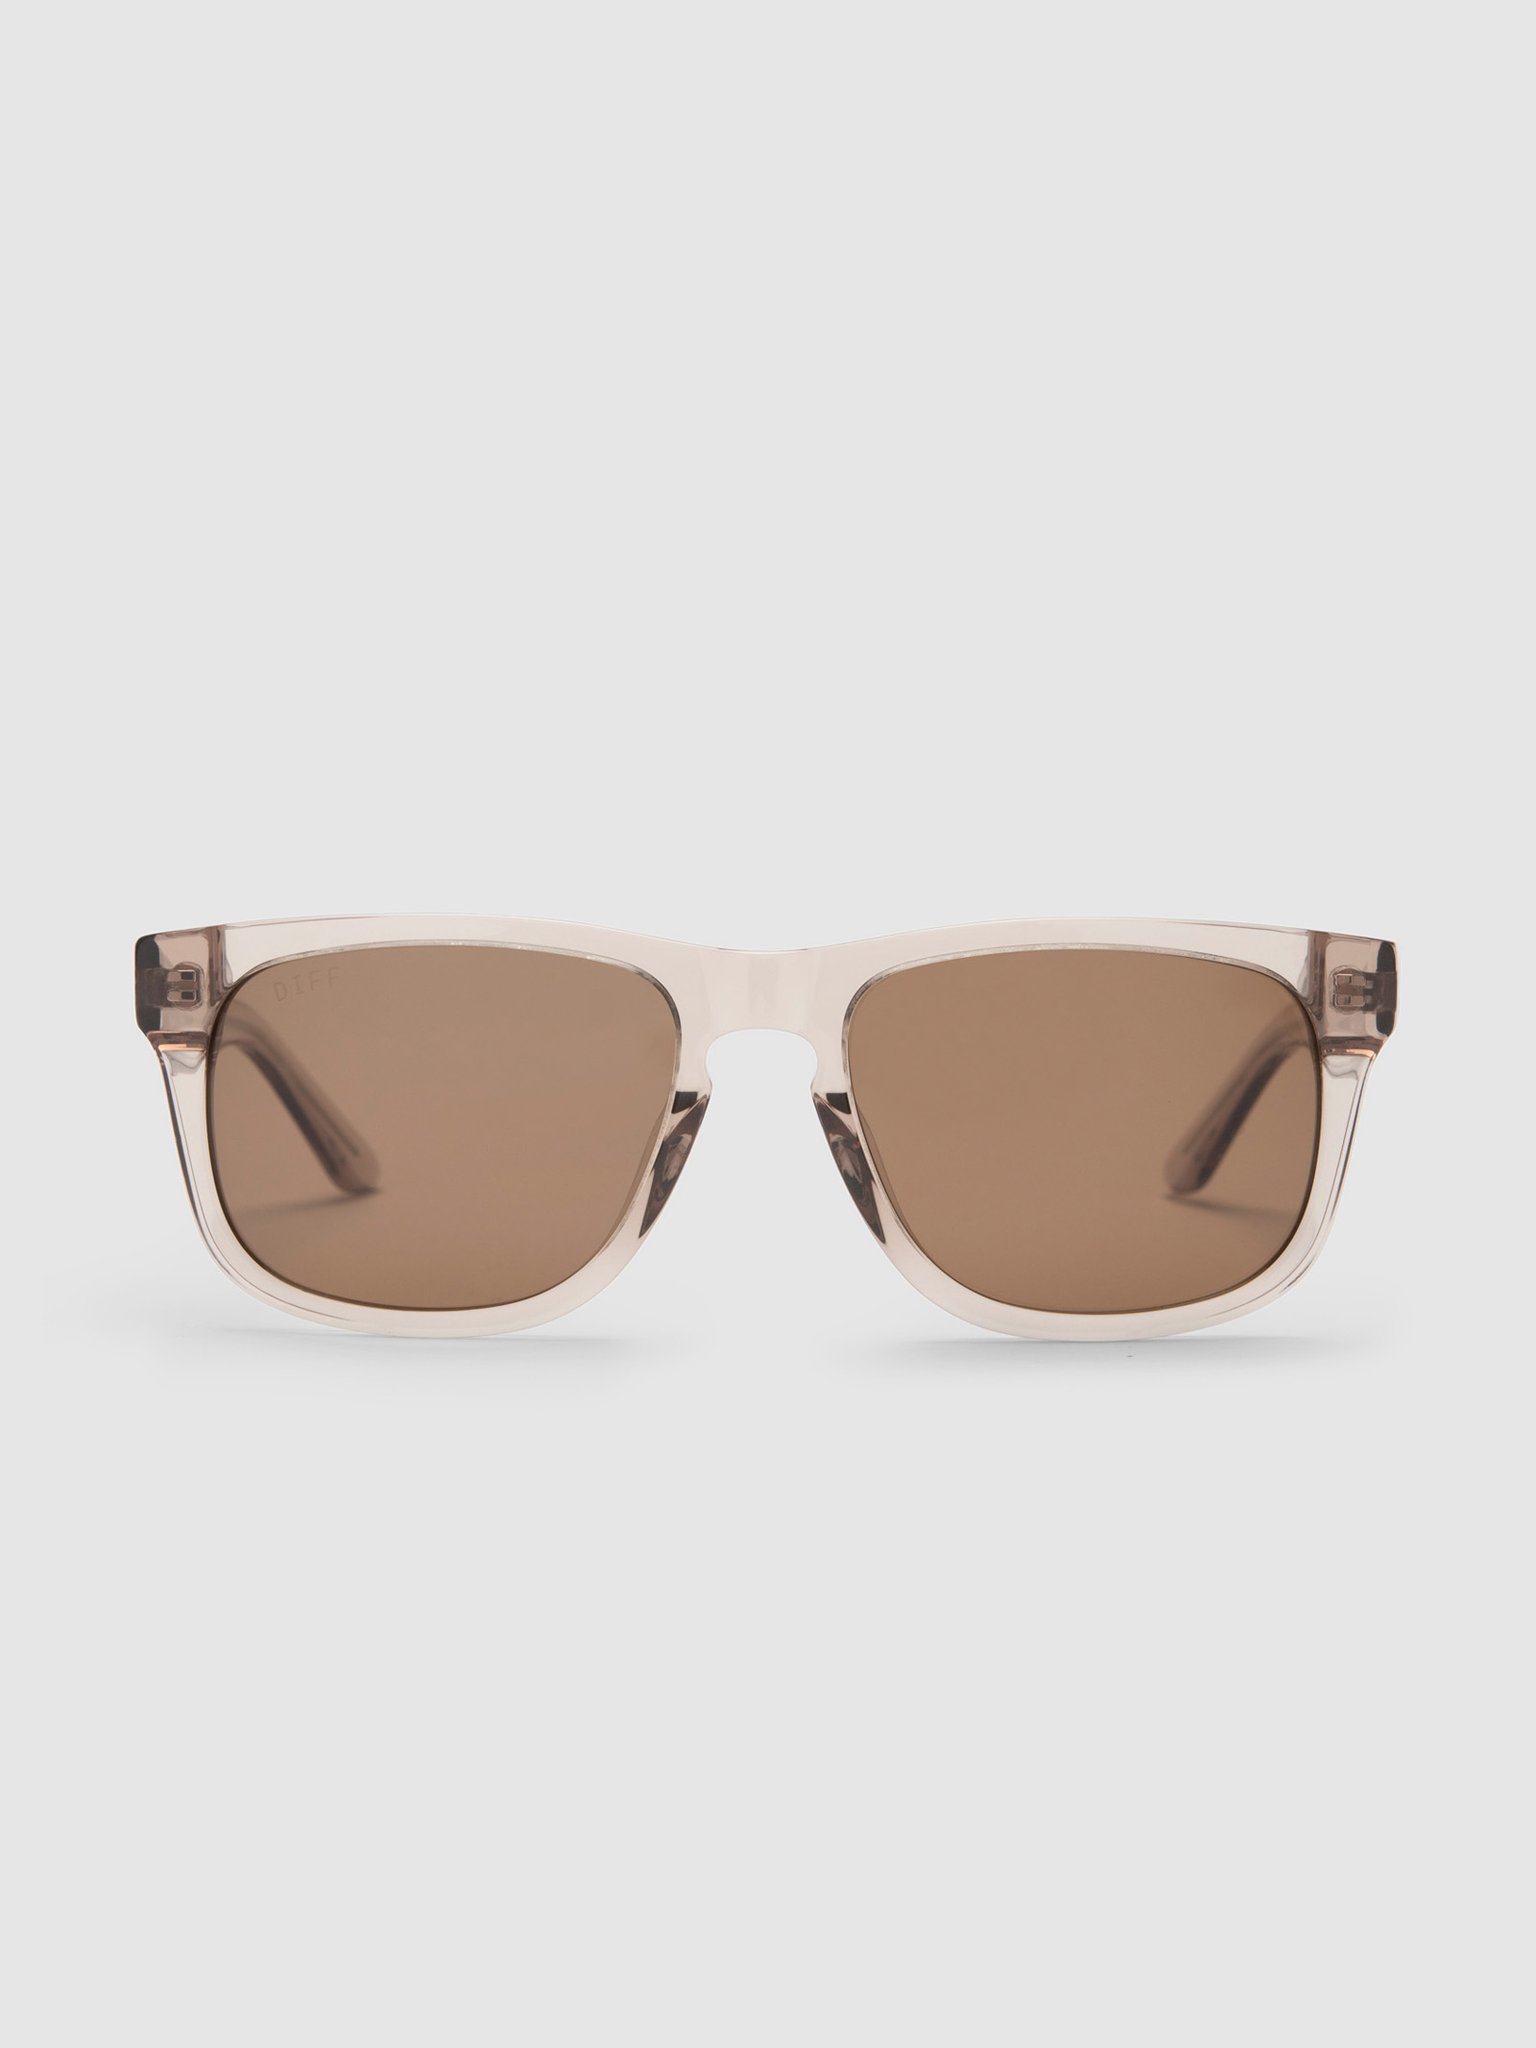 Diff Eyewear Riley Round Sunglasses | Verishop